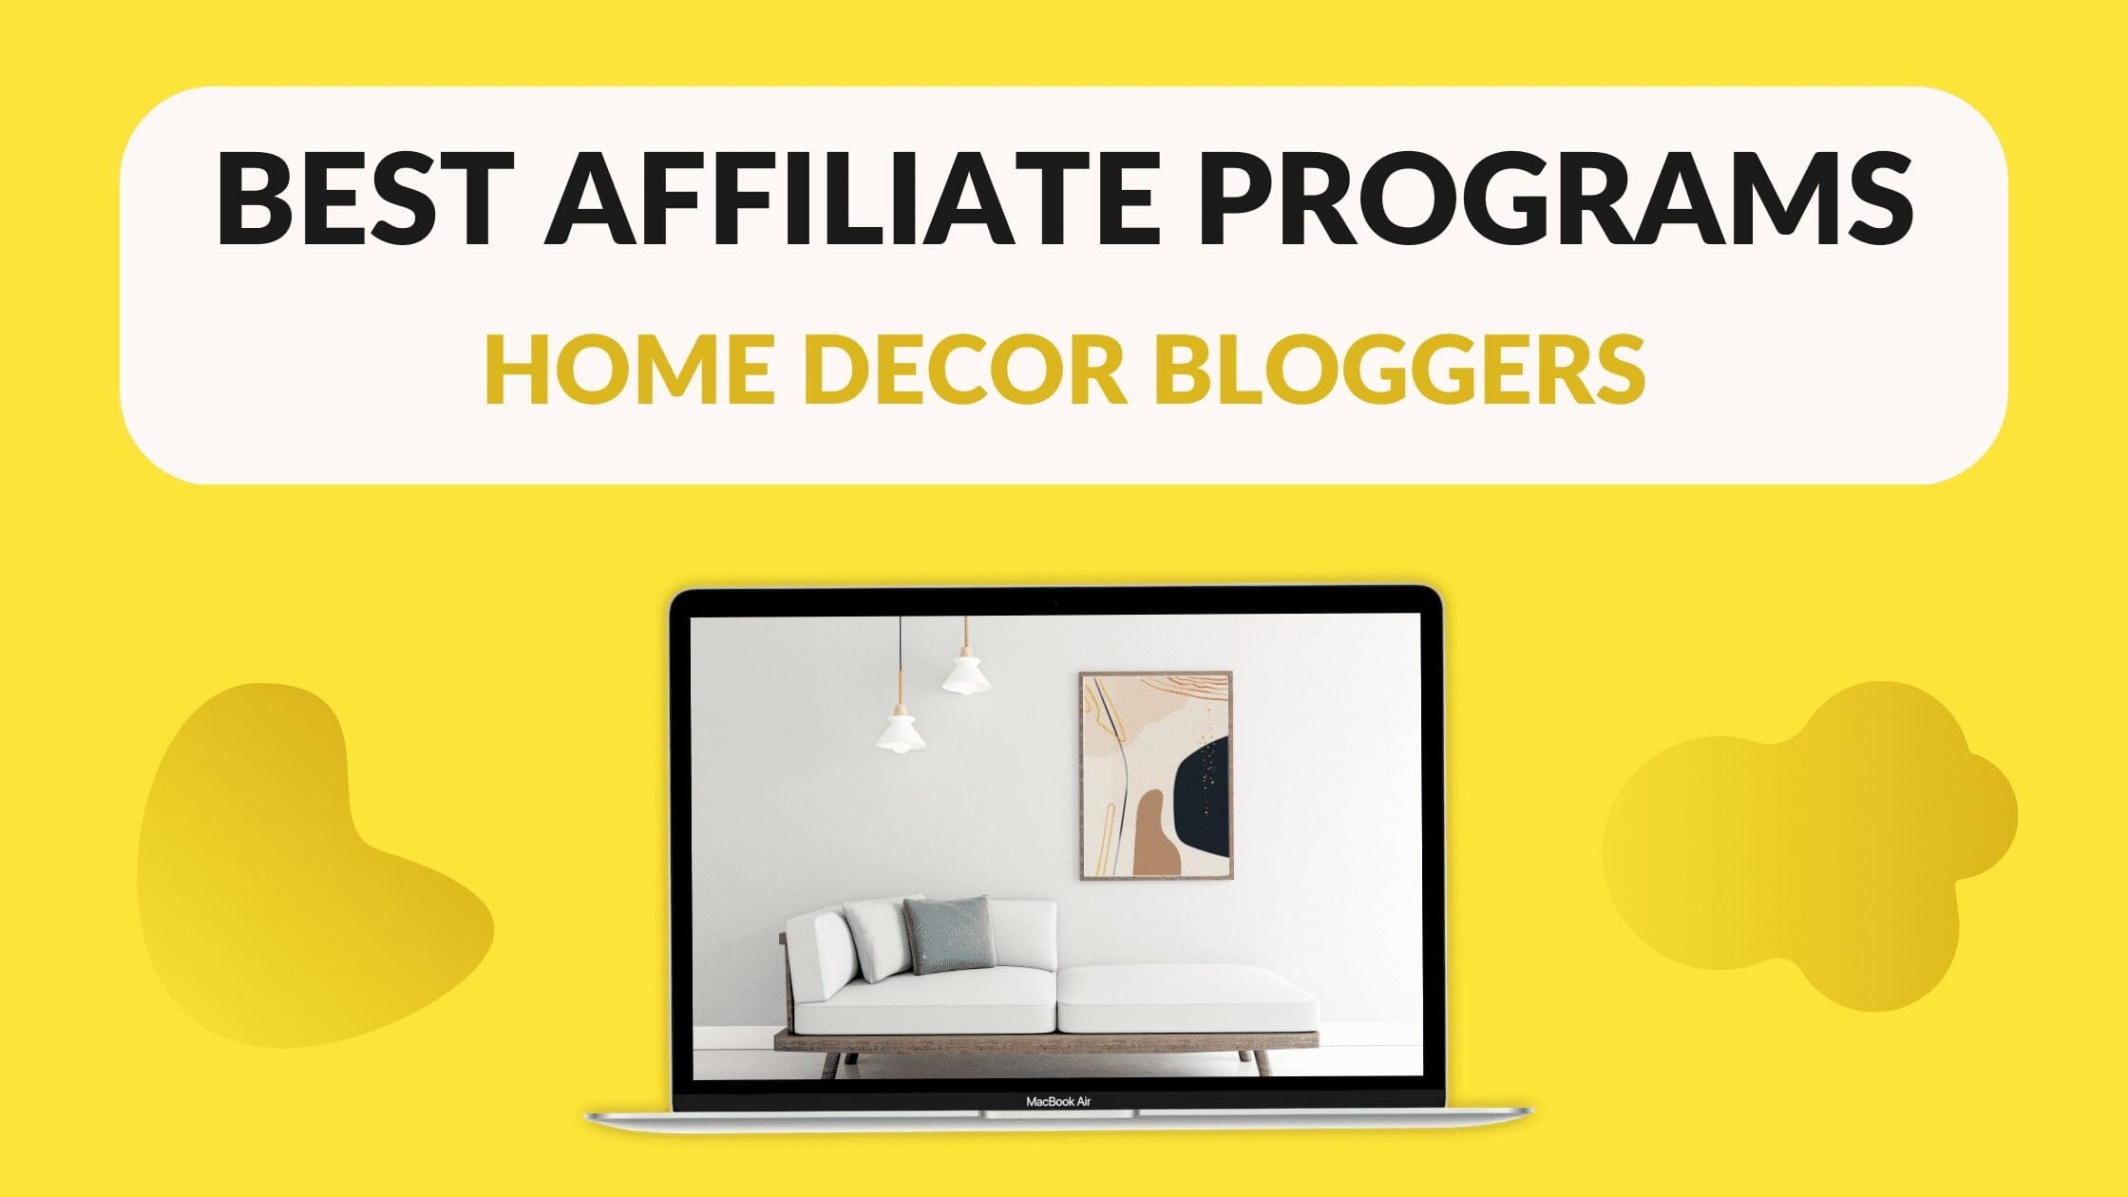 home decor affiliate programs Niche Utama Home Best Affiliate Programs for Home Decor Bloggers - Blogging Guide